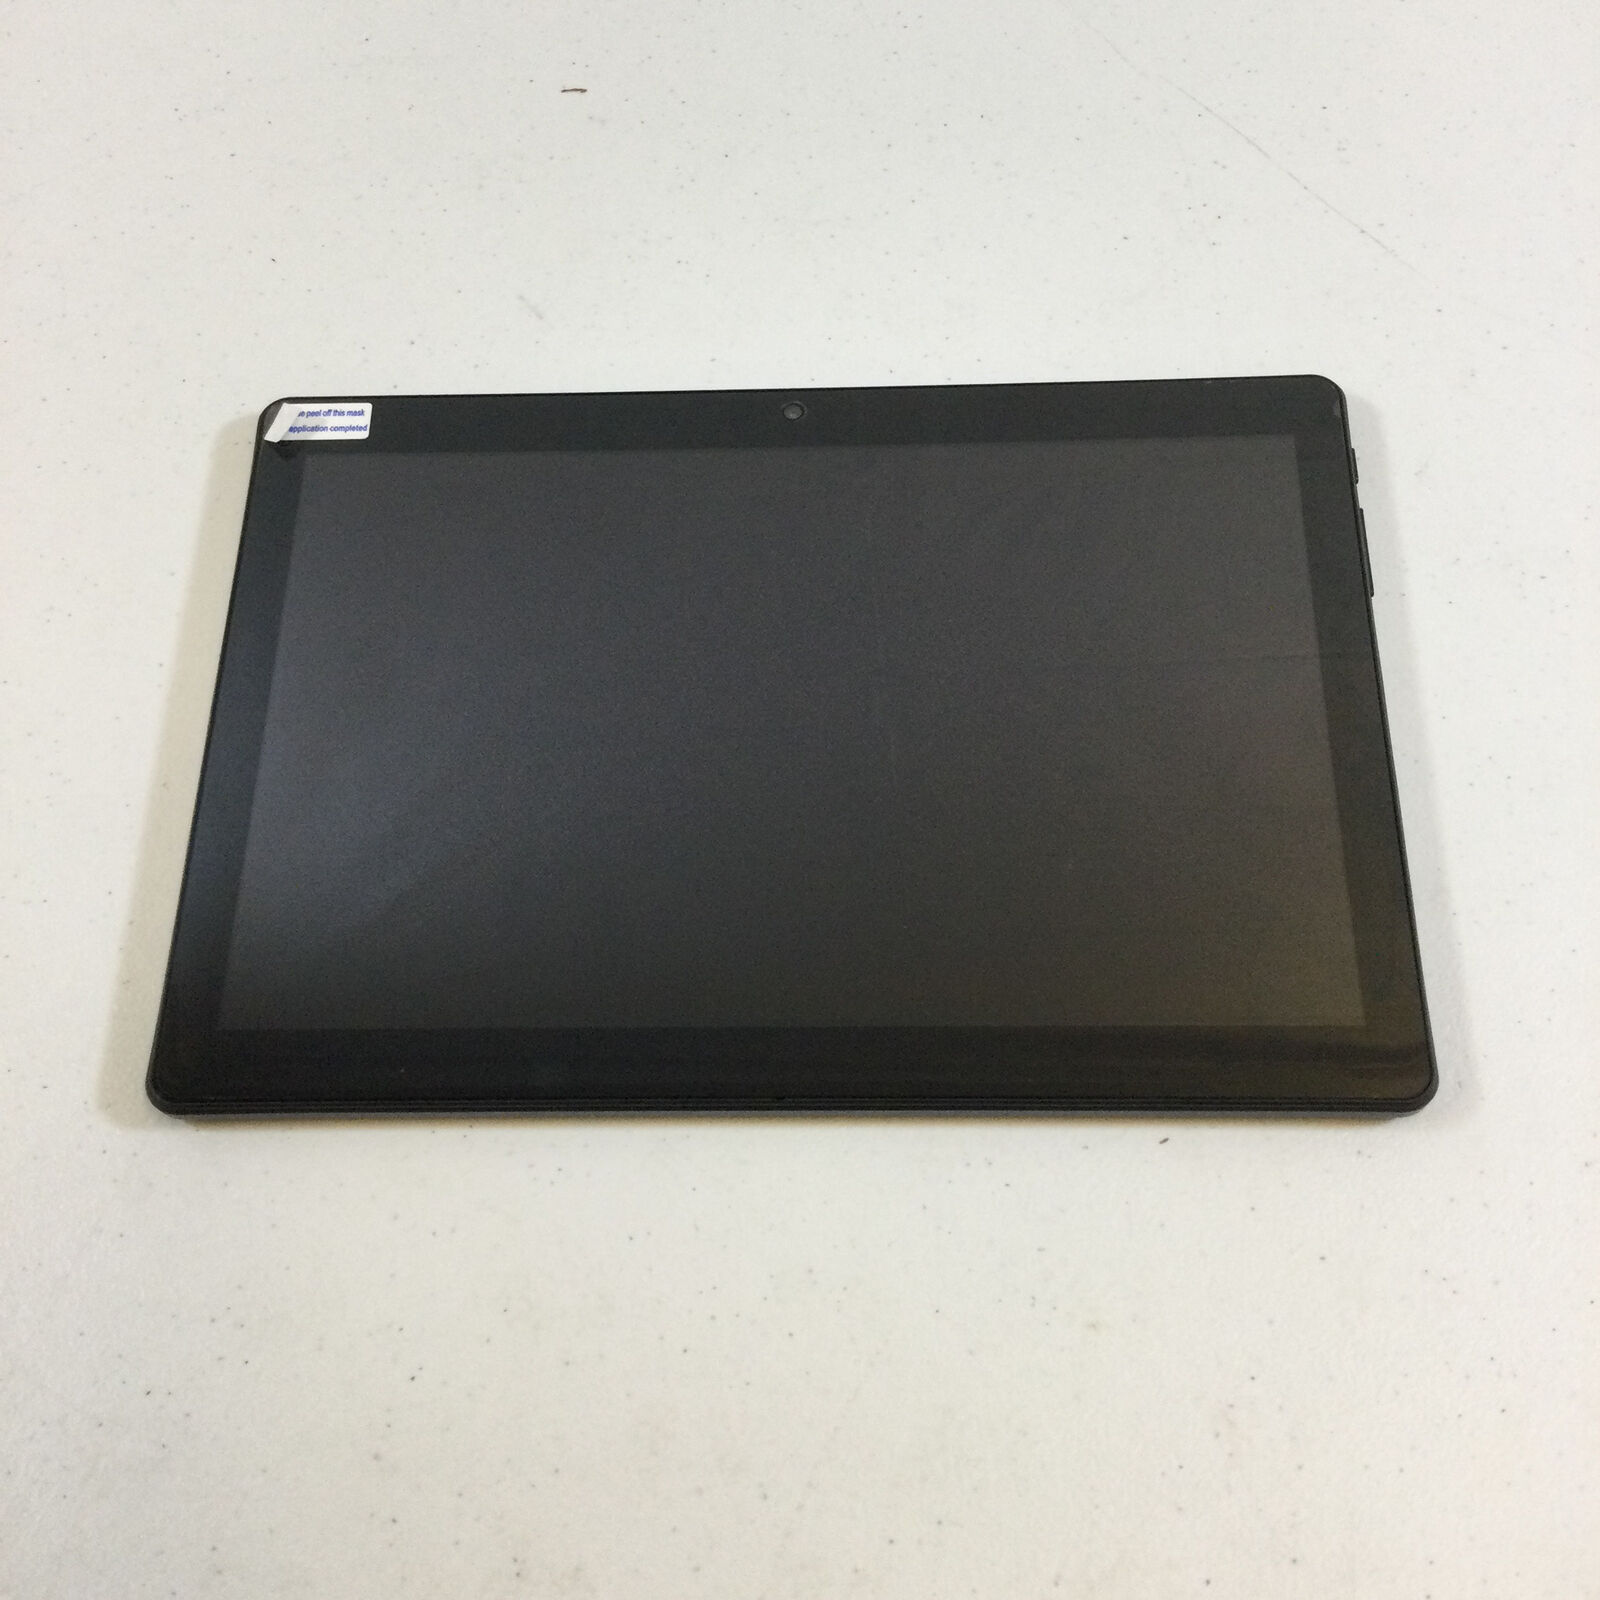 Feonal K105 Black 10 Inch 2 GB RAM 32 GB ROM HD Android Tablet Used